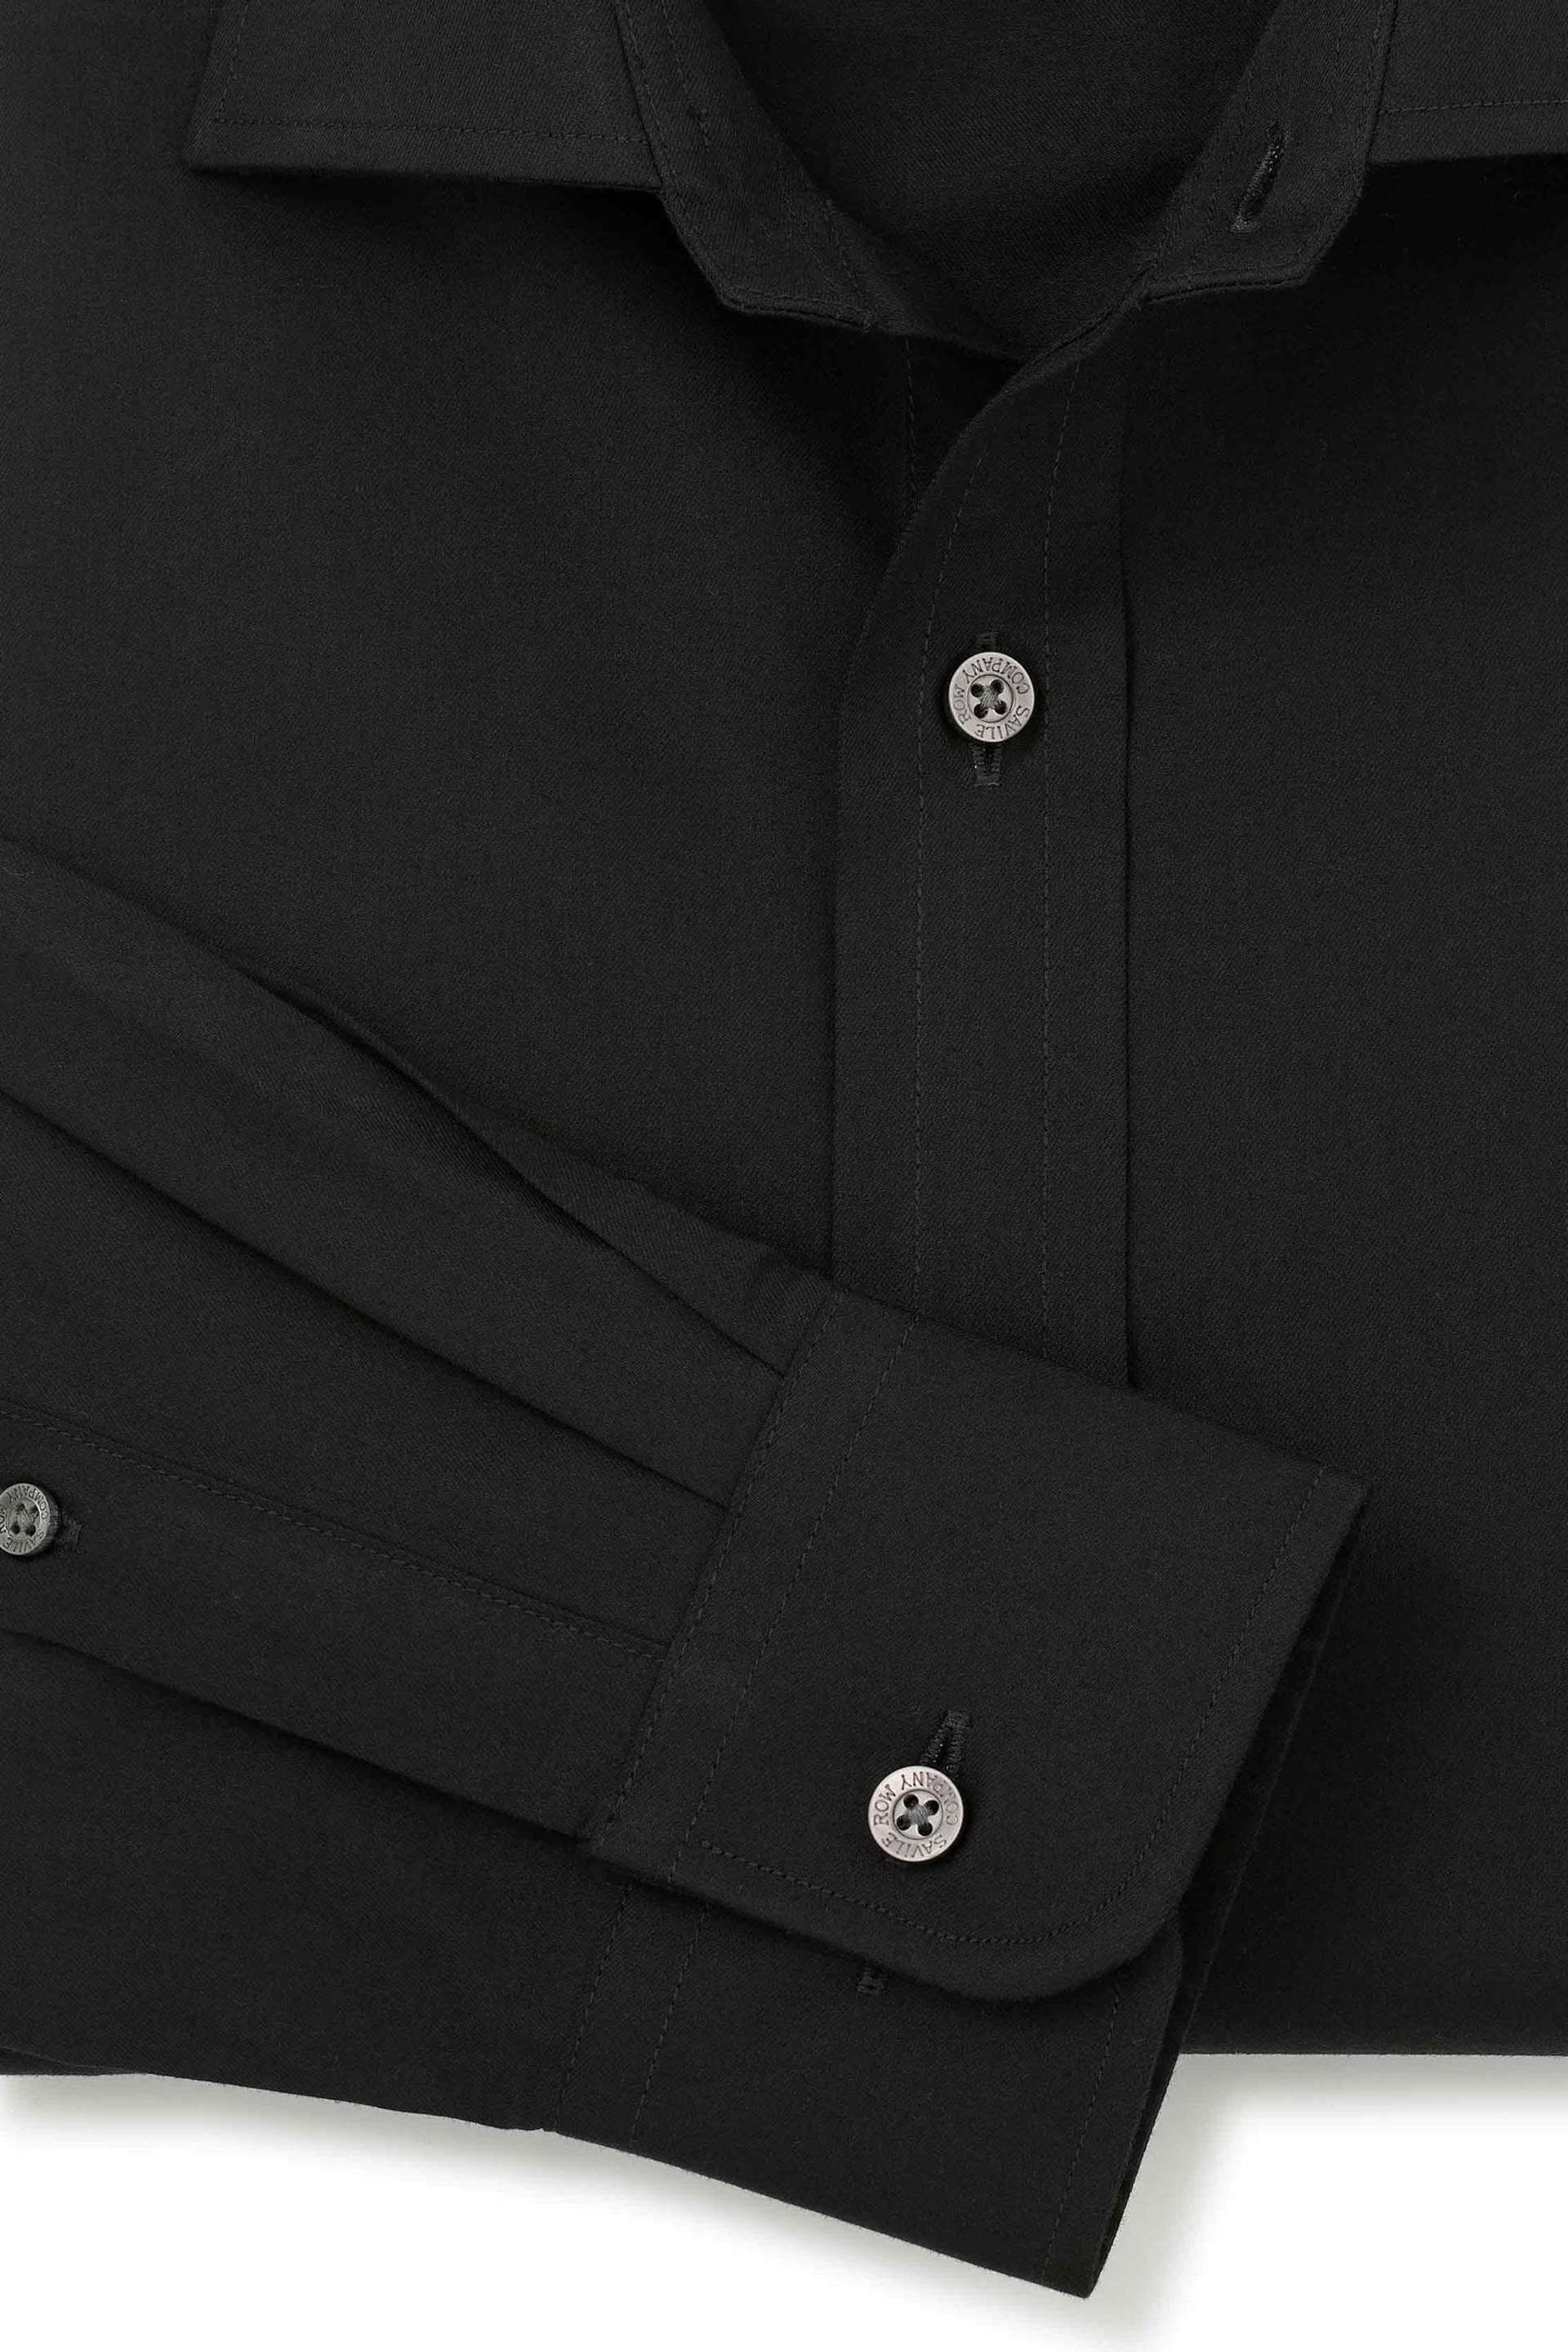 Savile Row Company Fine Twill Slim Single Cuff Formal Black Shirt - Image 5 of 5